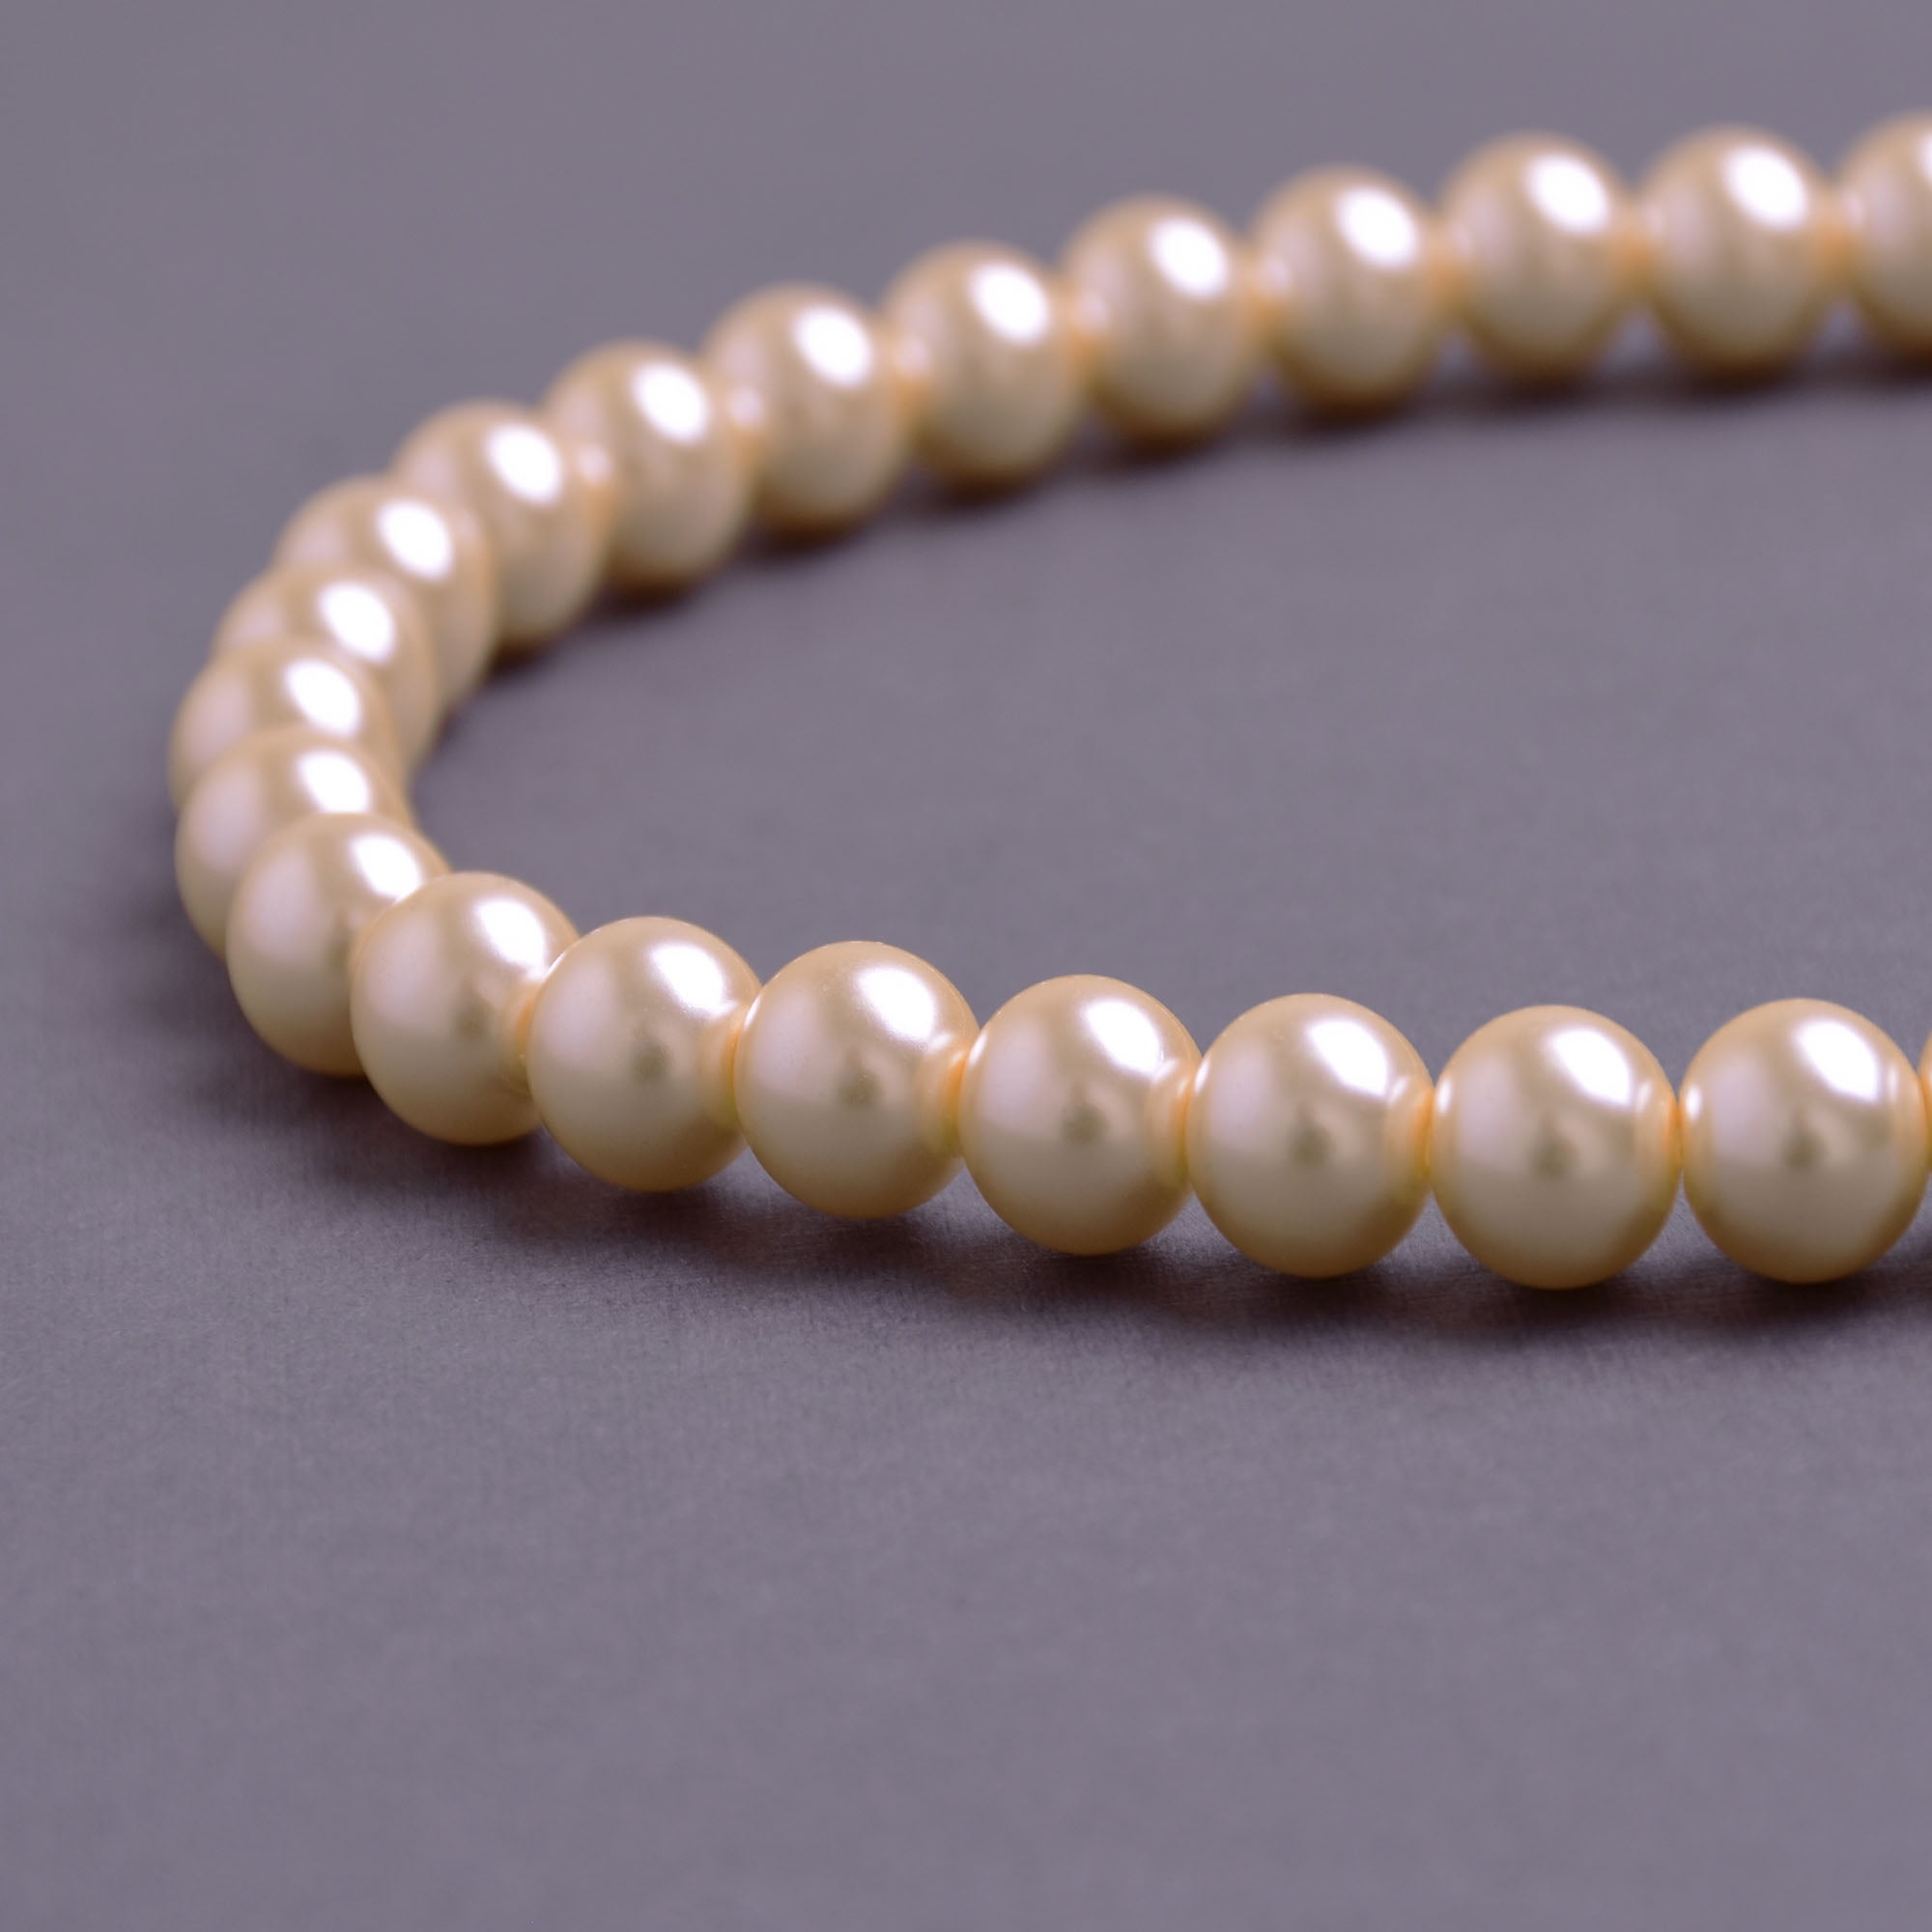 2000 pcs  White/ Ivory Decor Craft Pearls Decorative Half Pearl Beads 10mm 